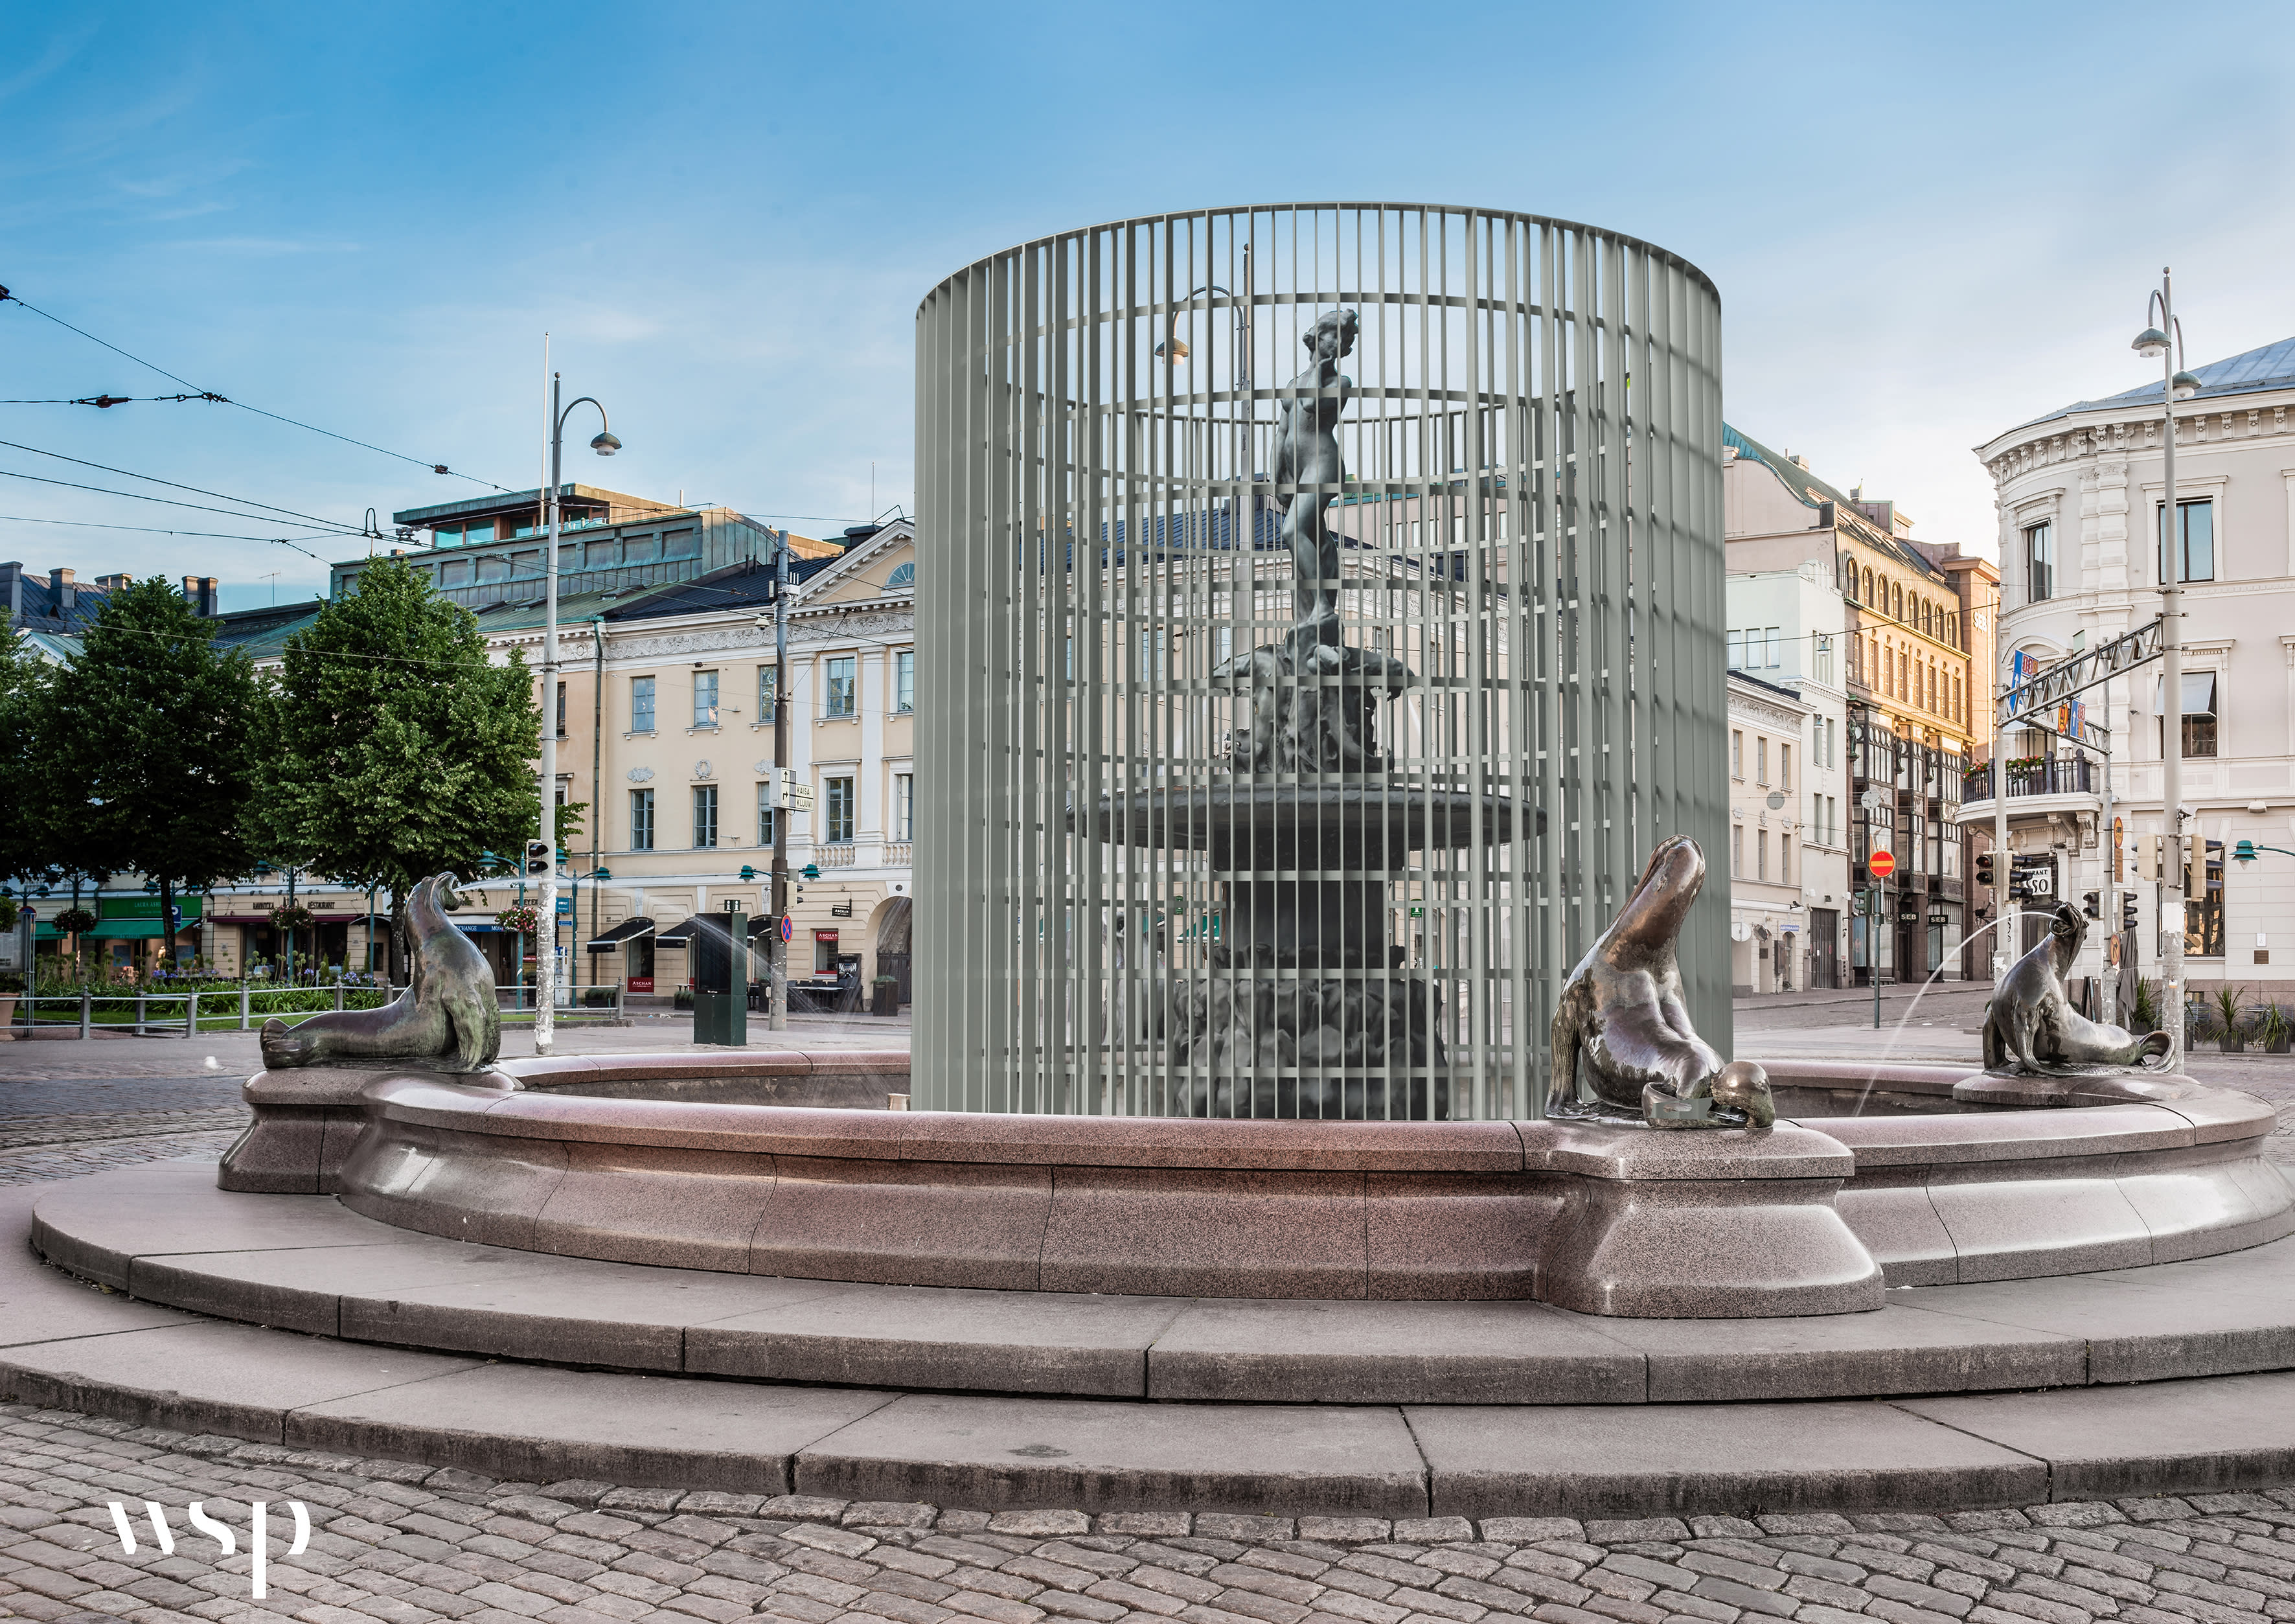 Helsinki will place the beloved Havis Amanda statue behind bars during the festivities